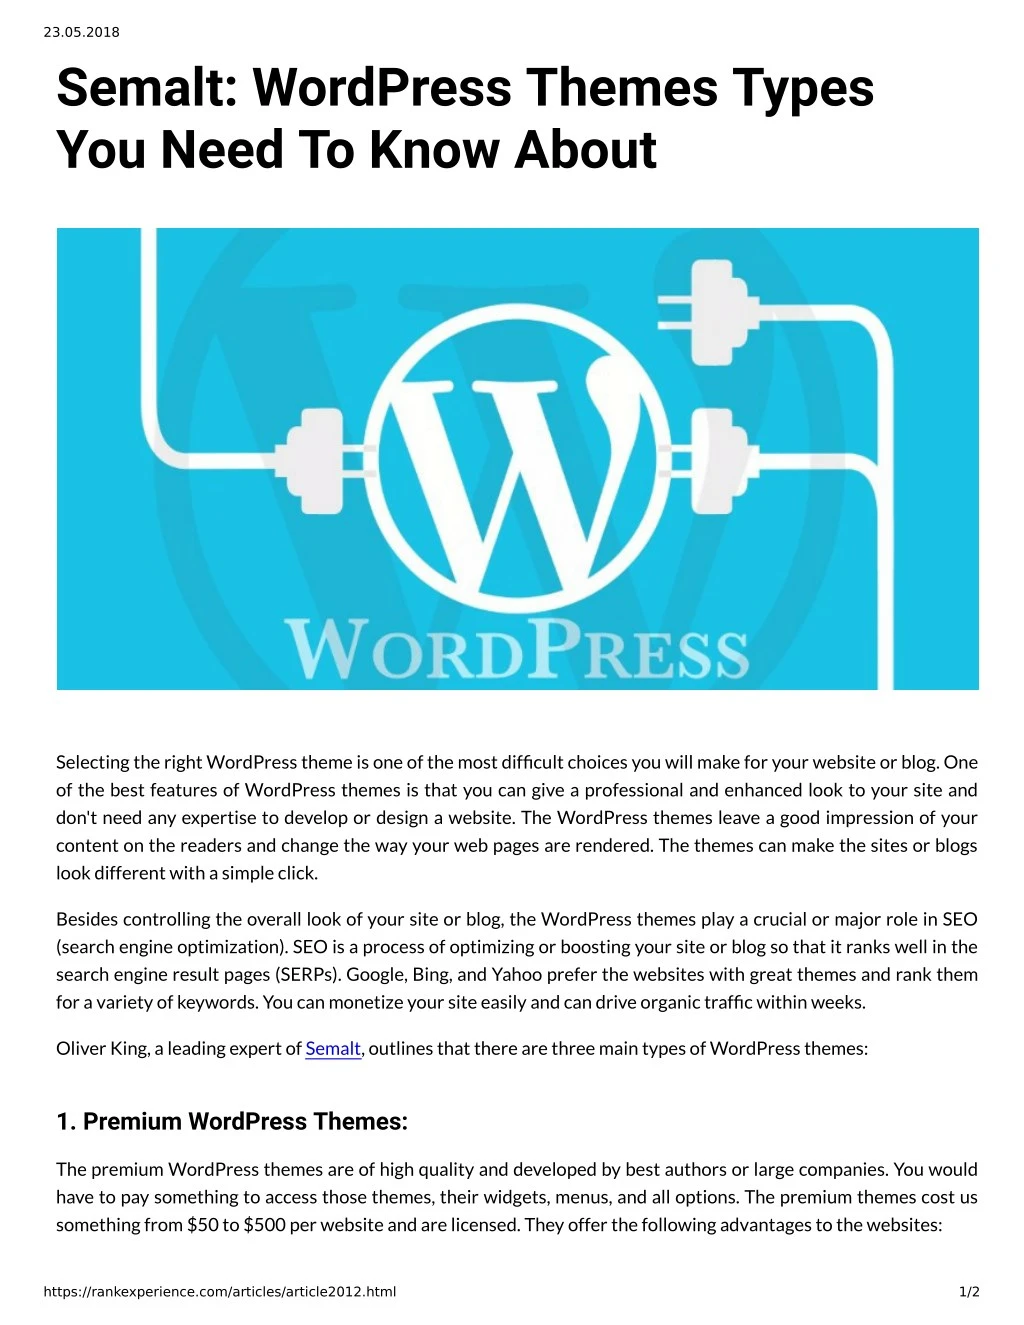 23 05 2018 semalt wordpress themes types you need